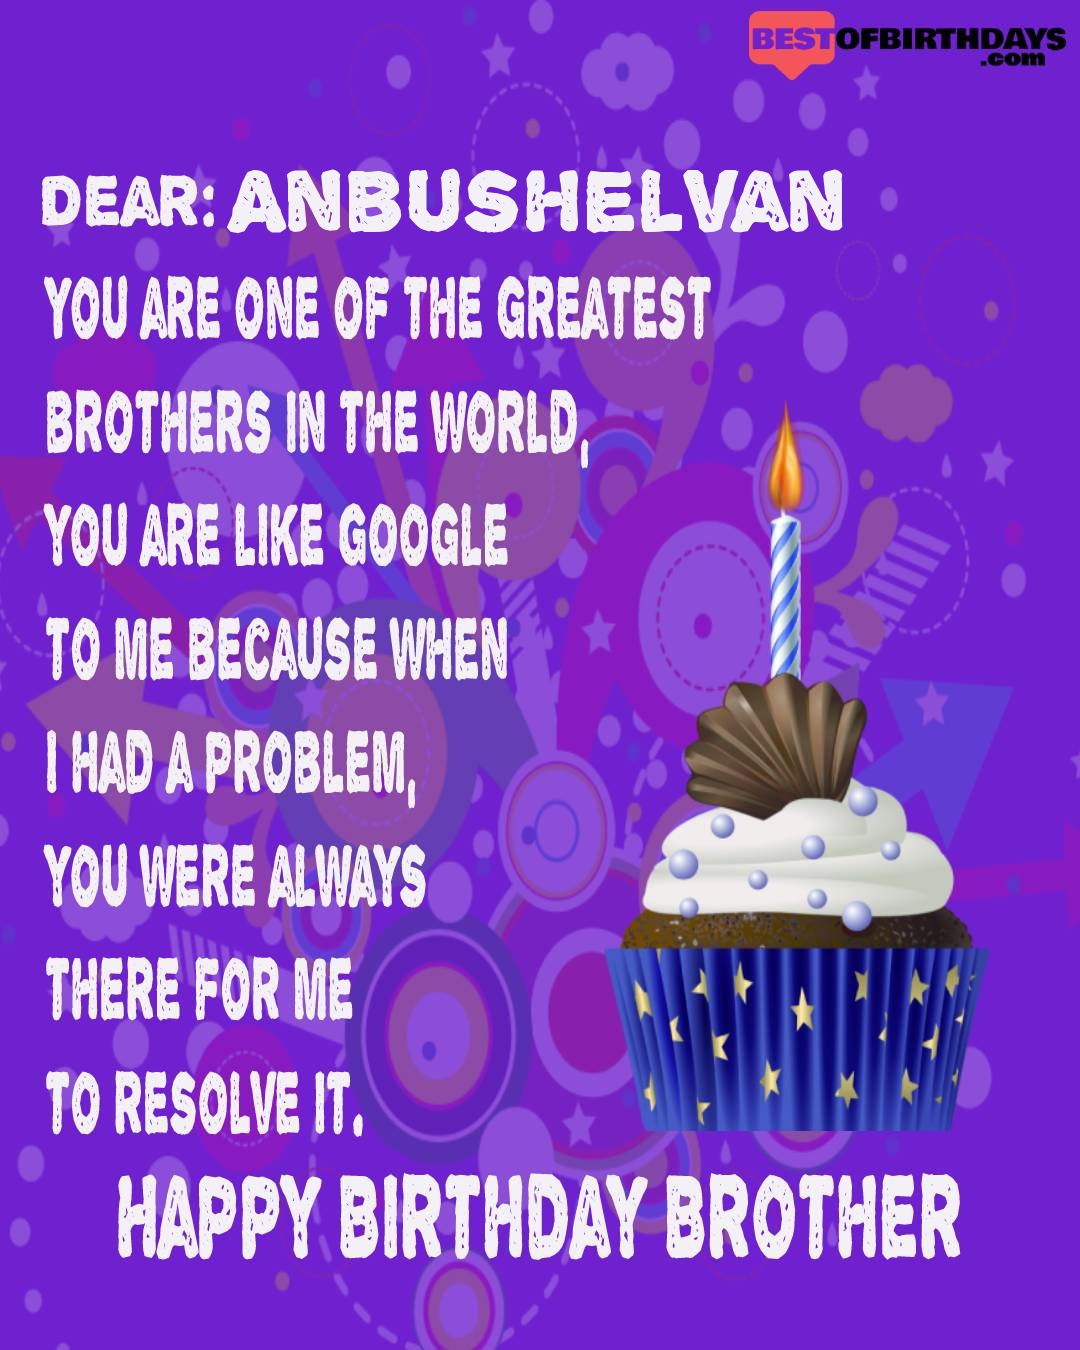 Happy birthday anbushelvan bhai brother bro